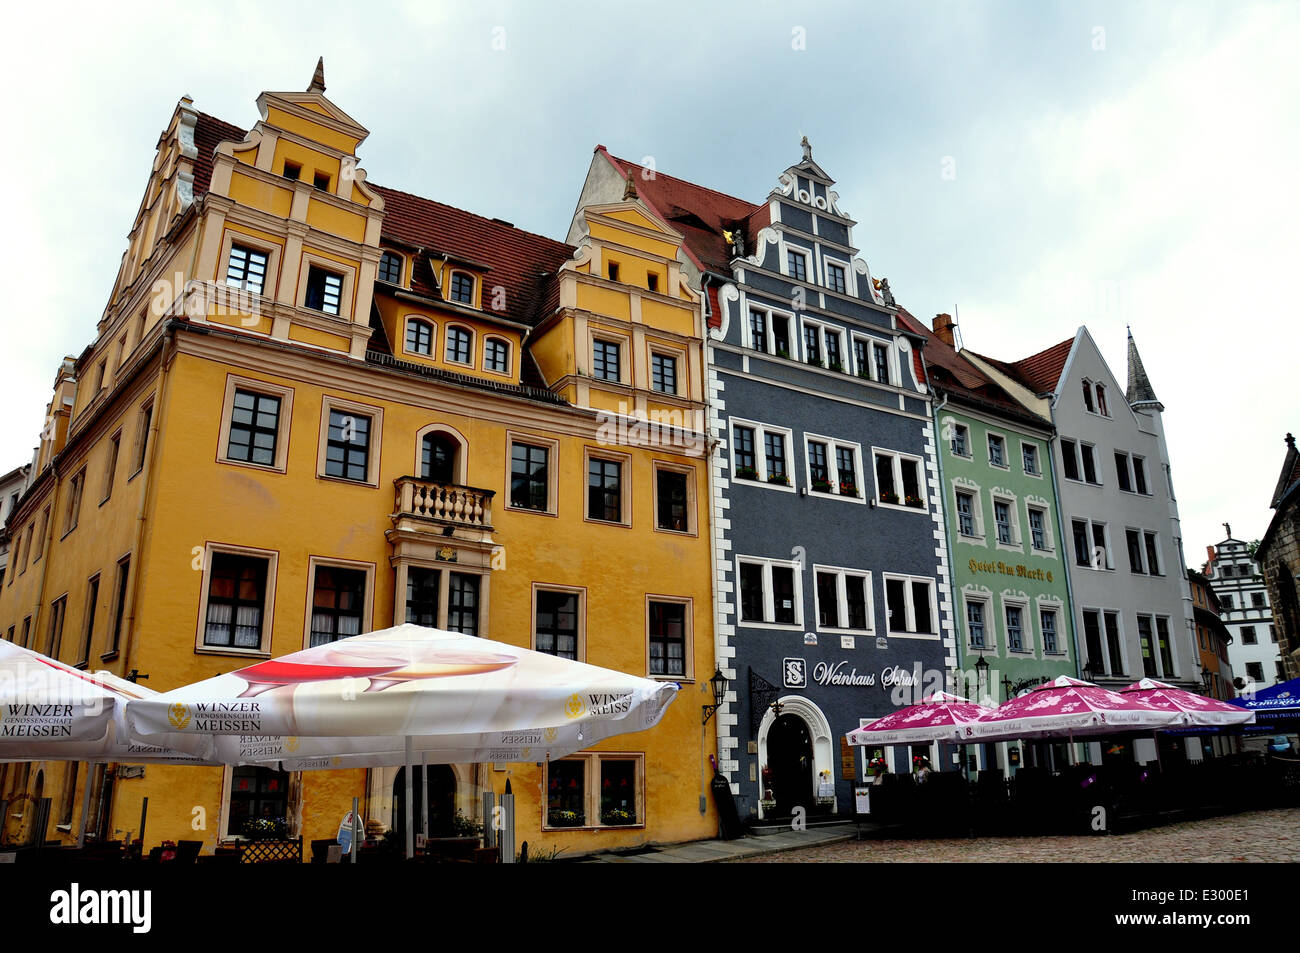 Meissen, Germany: 15-17th century Renaissance and gothic buildings in the Marktplatz Stock Photo